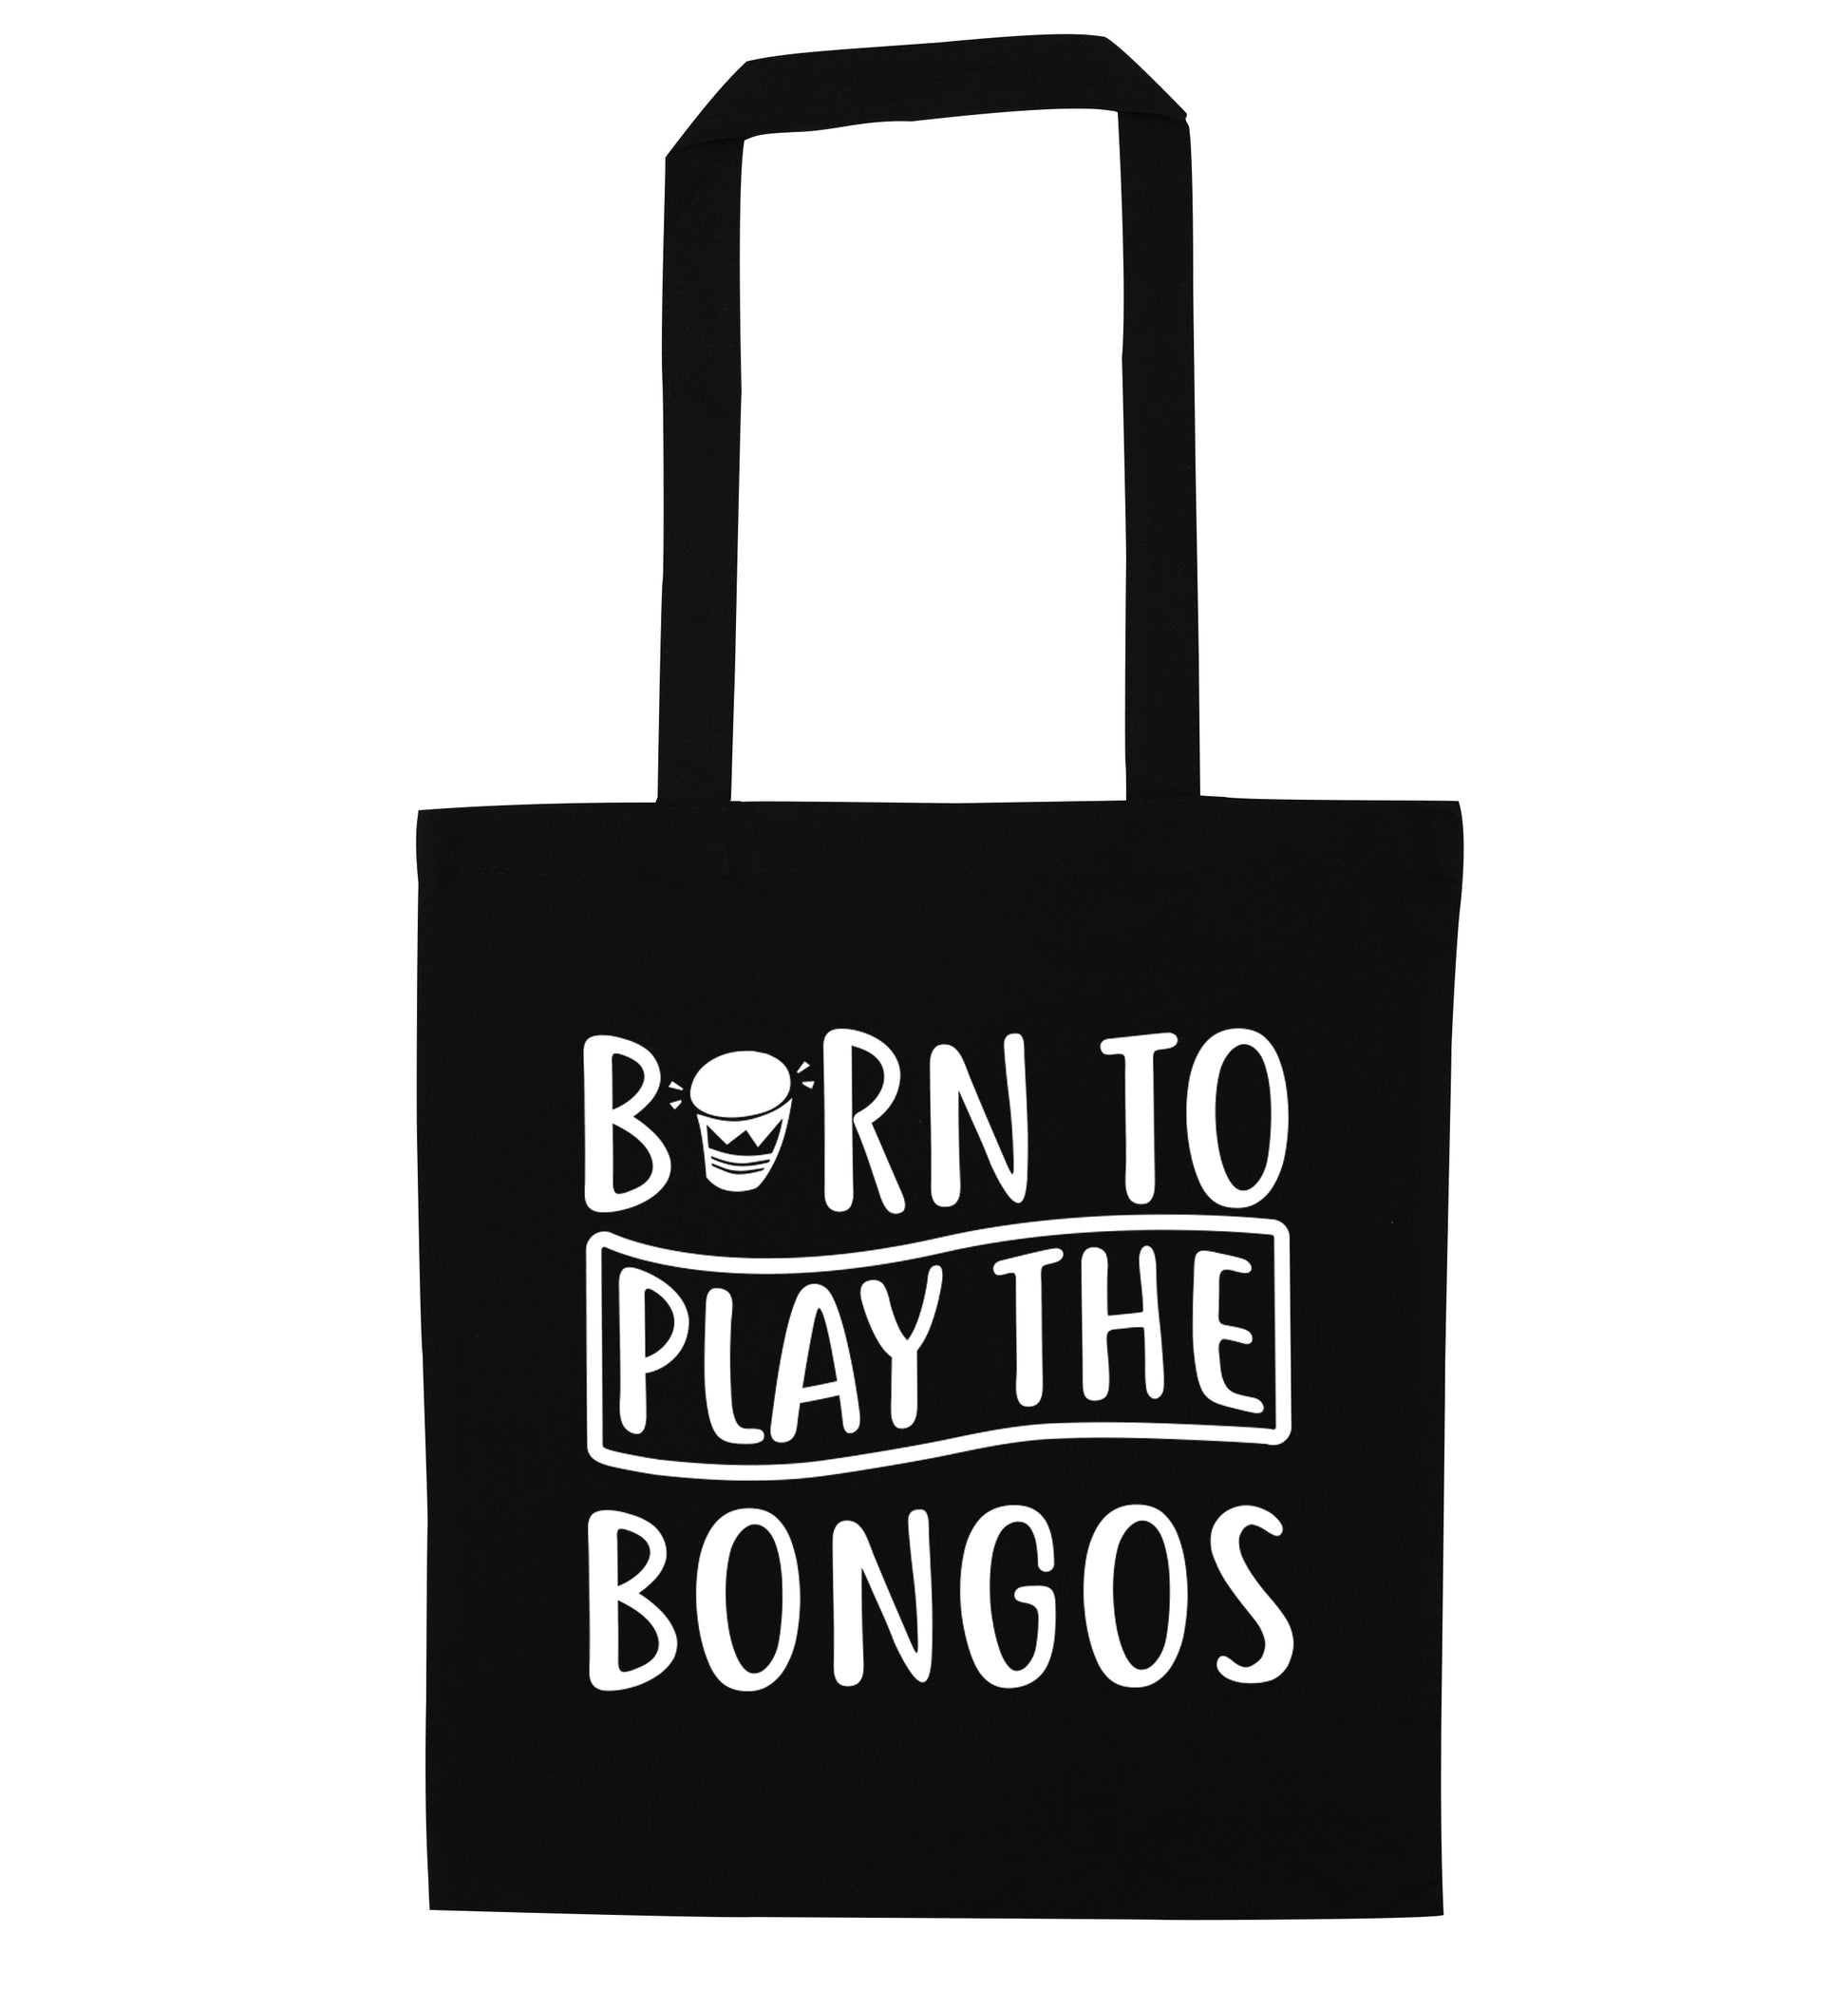 Born to play the bongos black tote bag